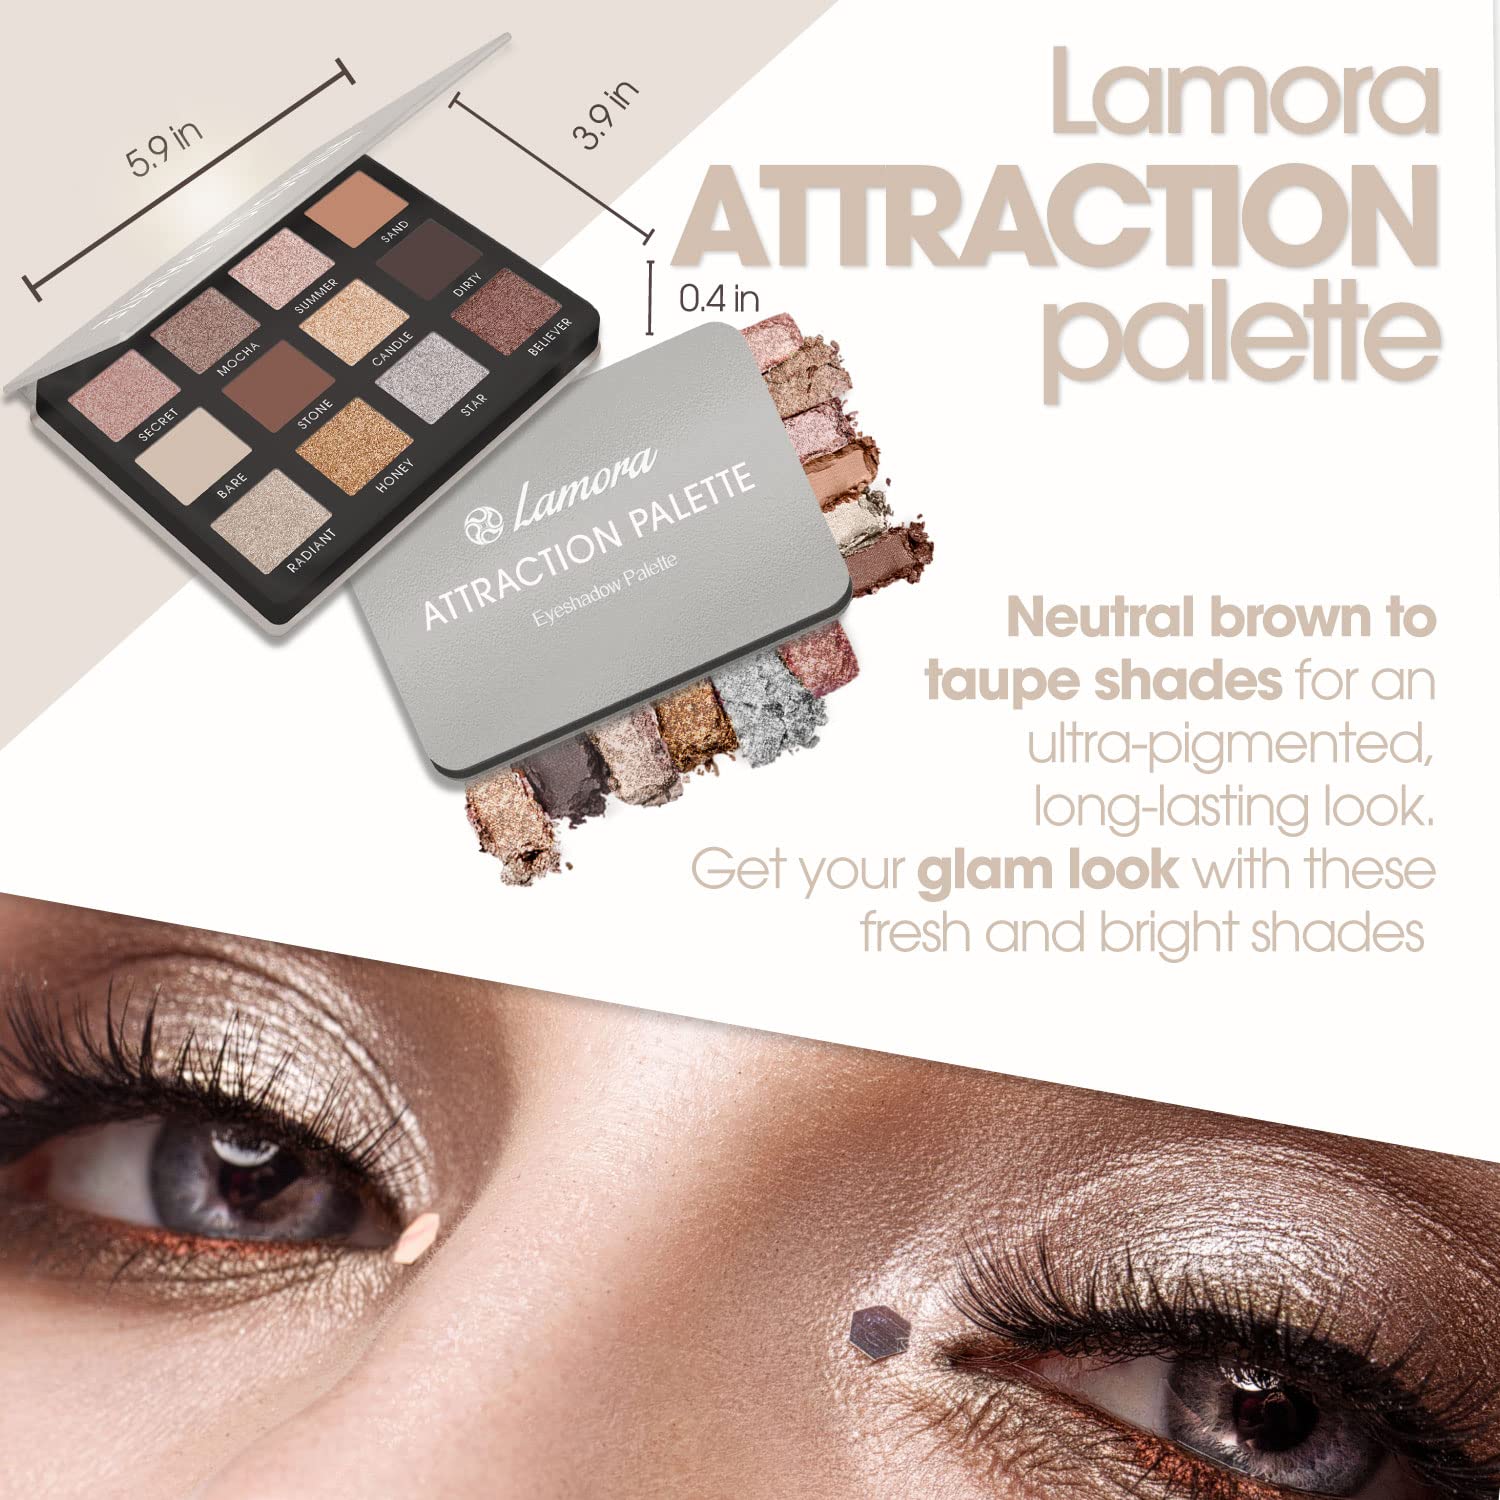 Eye shadow palette Fashion Make Up Dream case n°4 Gold